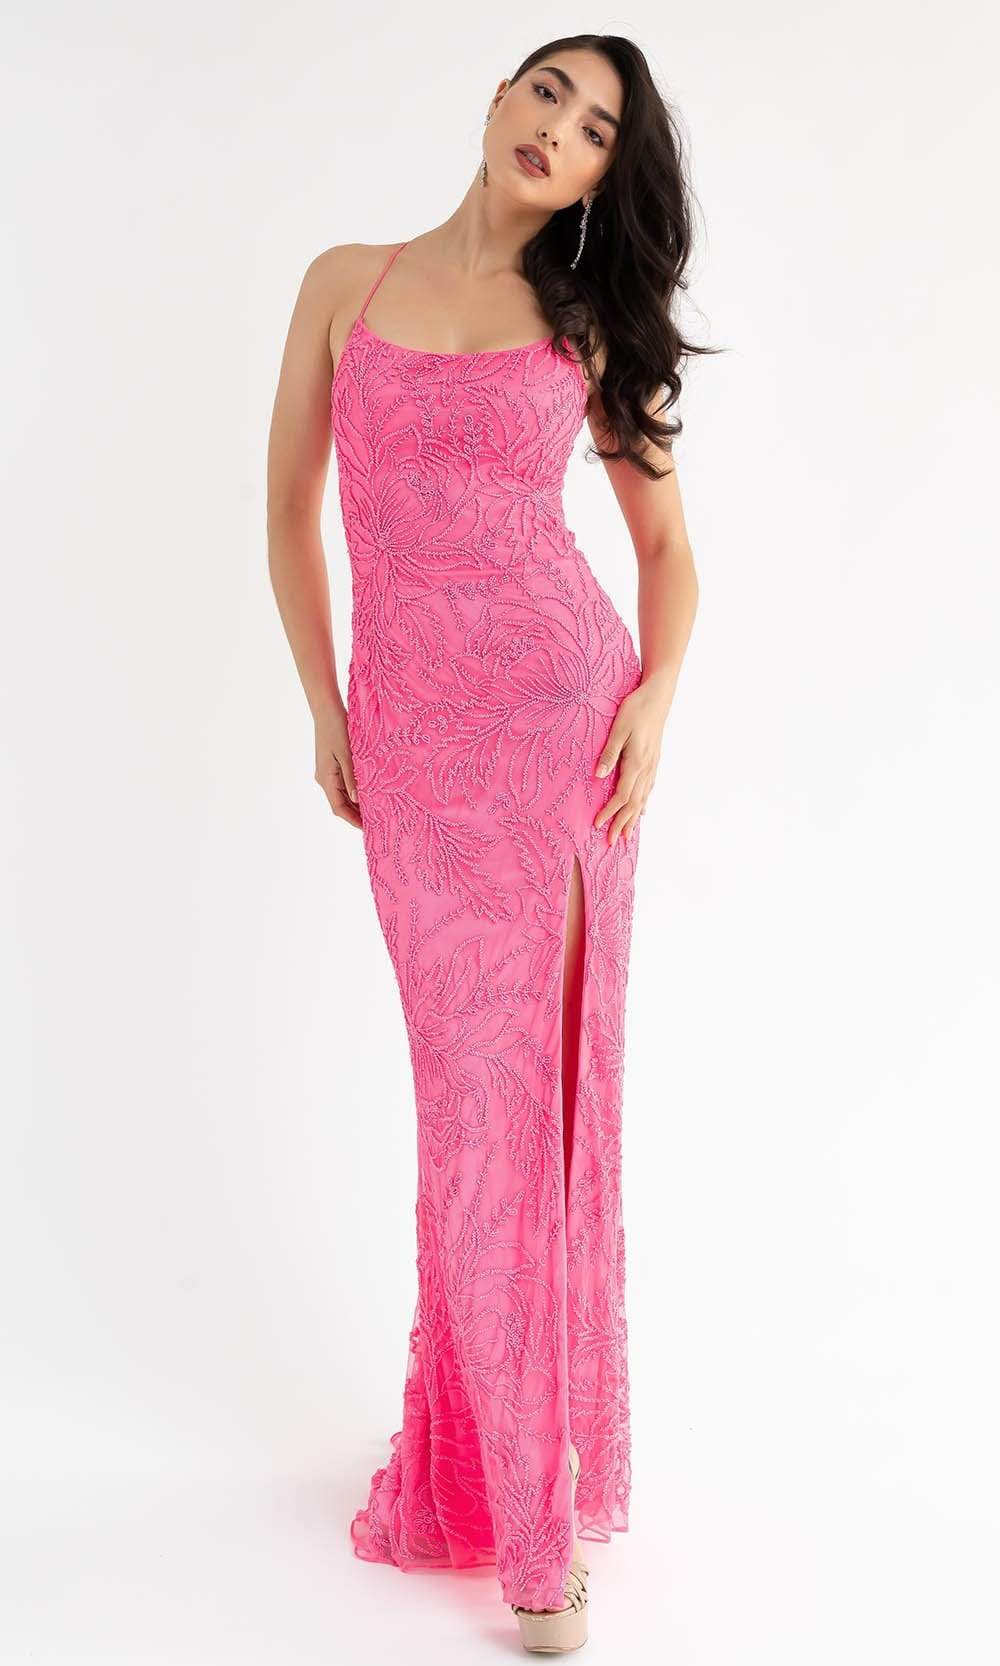 Primavera Couture - 3786 Sequin Scoop Neckline Long Gown Special Occasion Dress